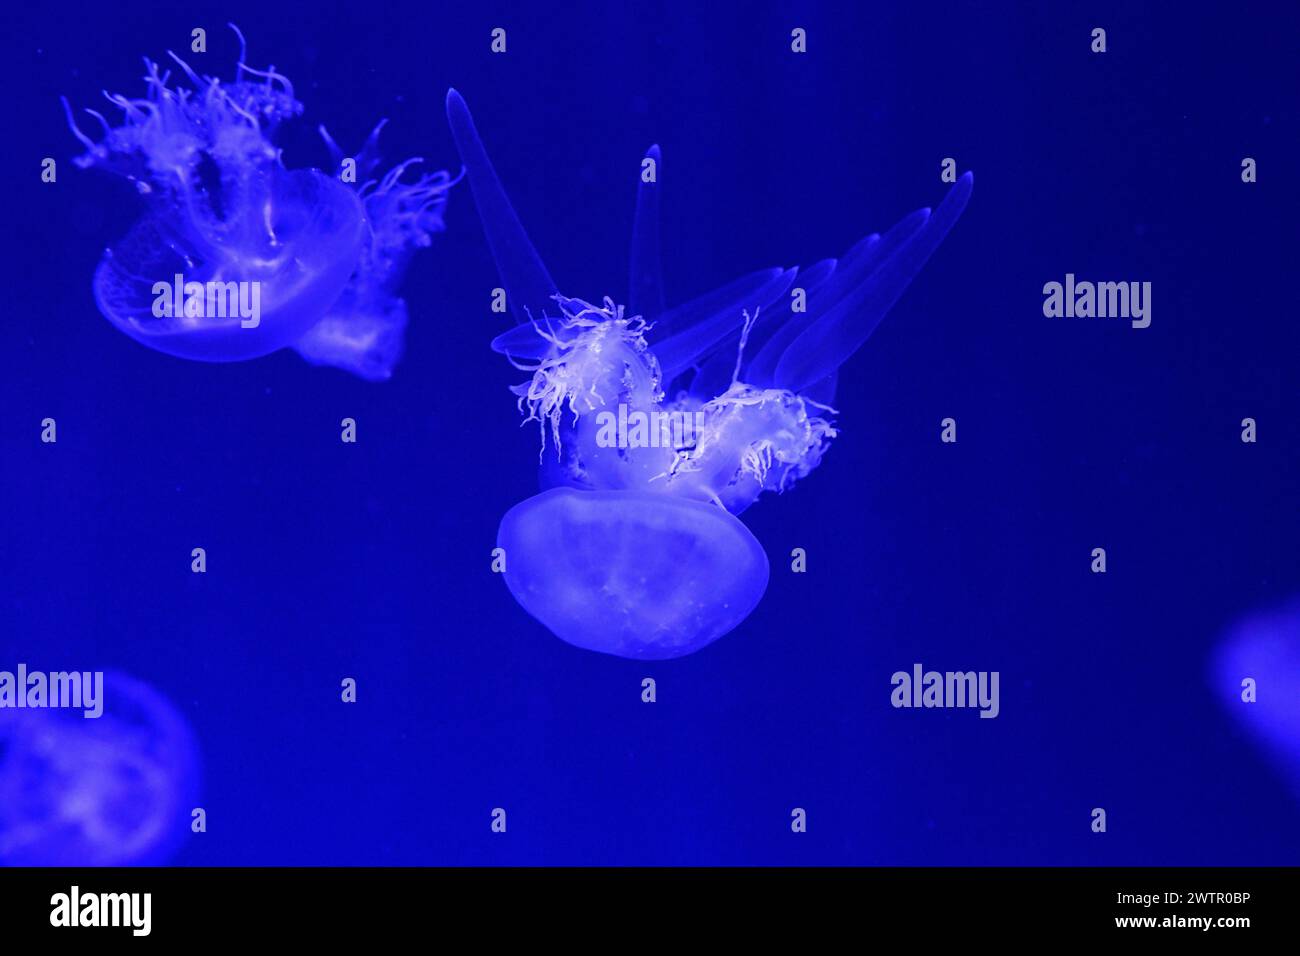 Sand jellyfish (Rhopilema asamushi or Rhopilema esculentum asamushi) is a jellyfish native to temperate waters of Pacific Ocean. Stock Photo